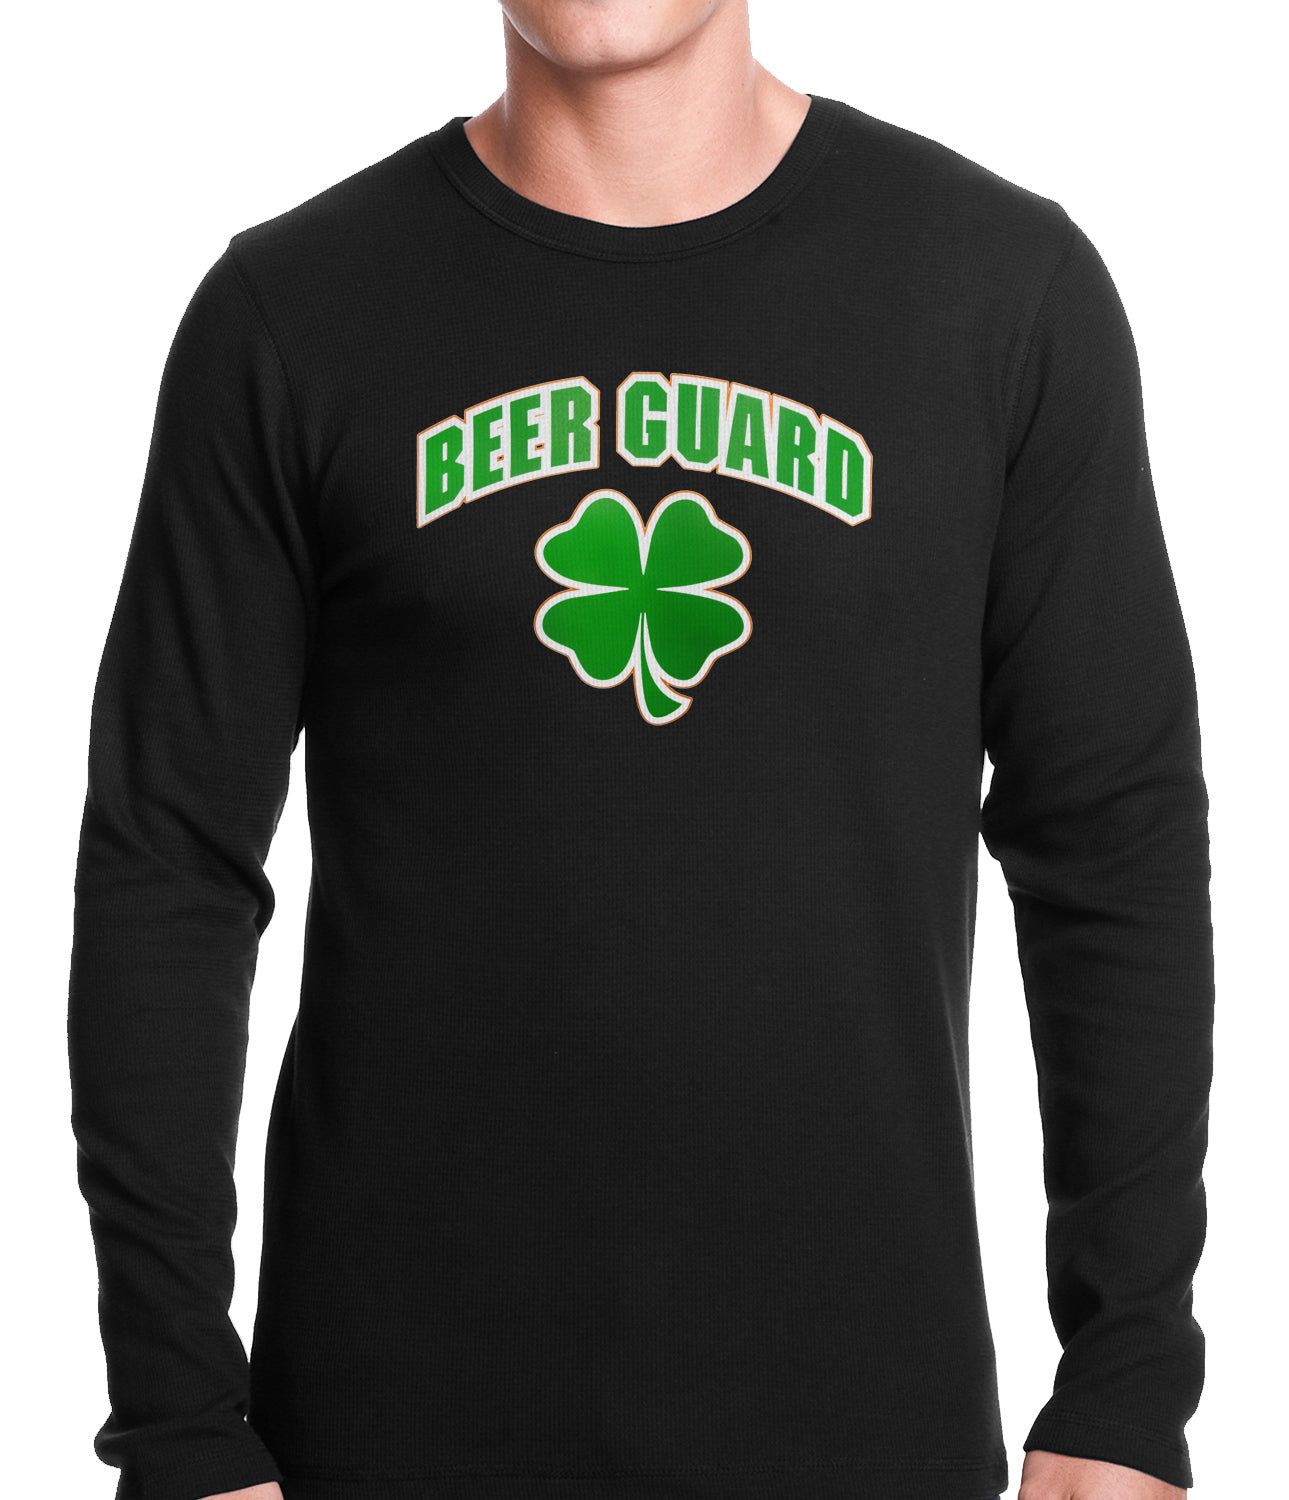 Beer Guard Irish Shamrock St. Patrick's Day Thermal Shirt Black